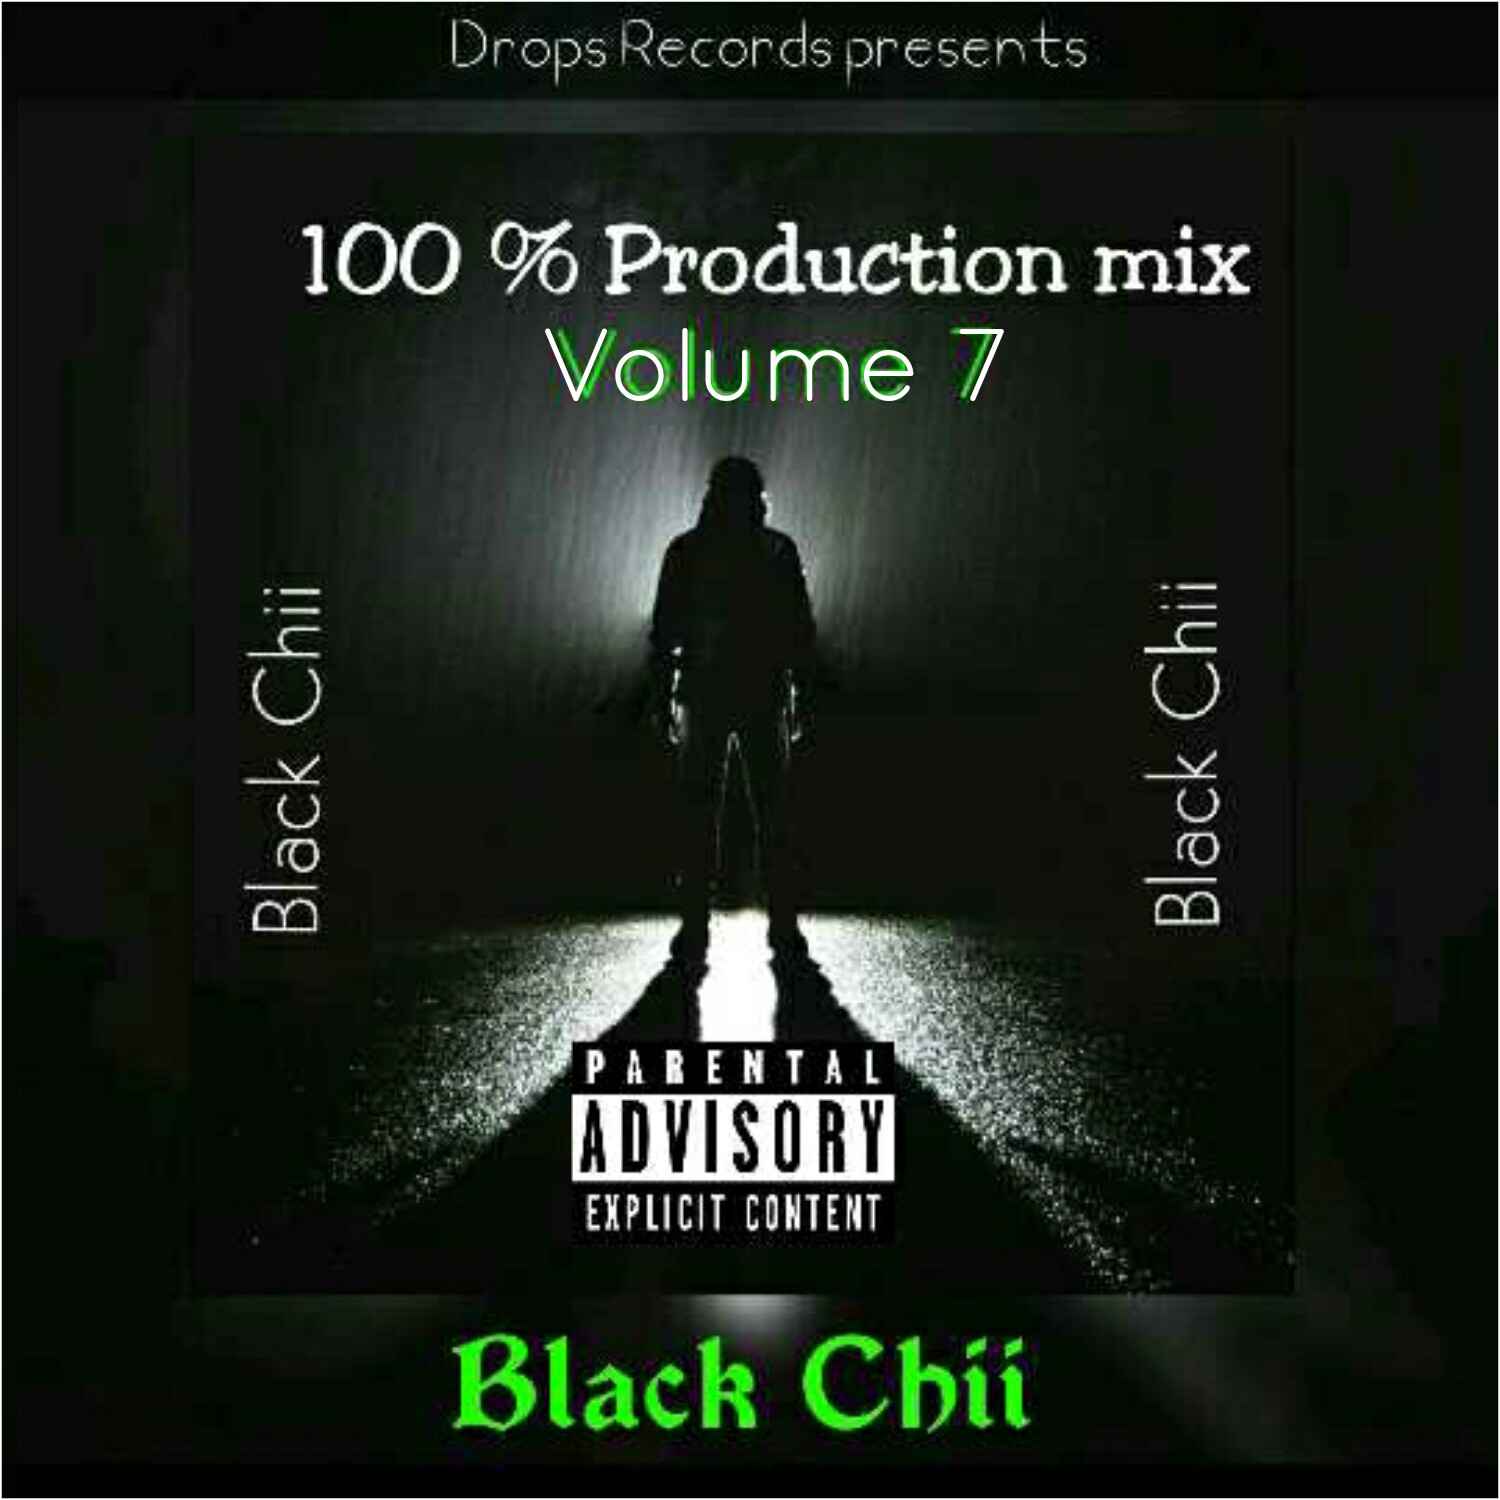 Black Chii 100% Production mix vol. 7